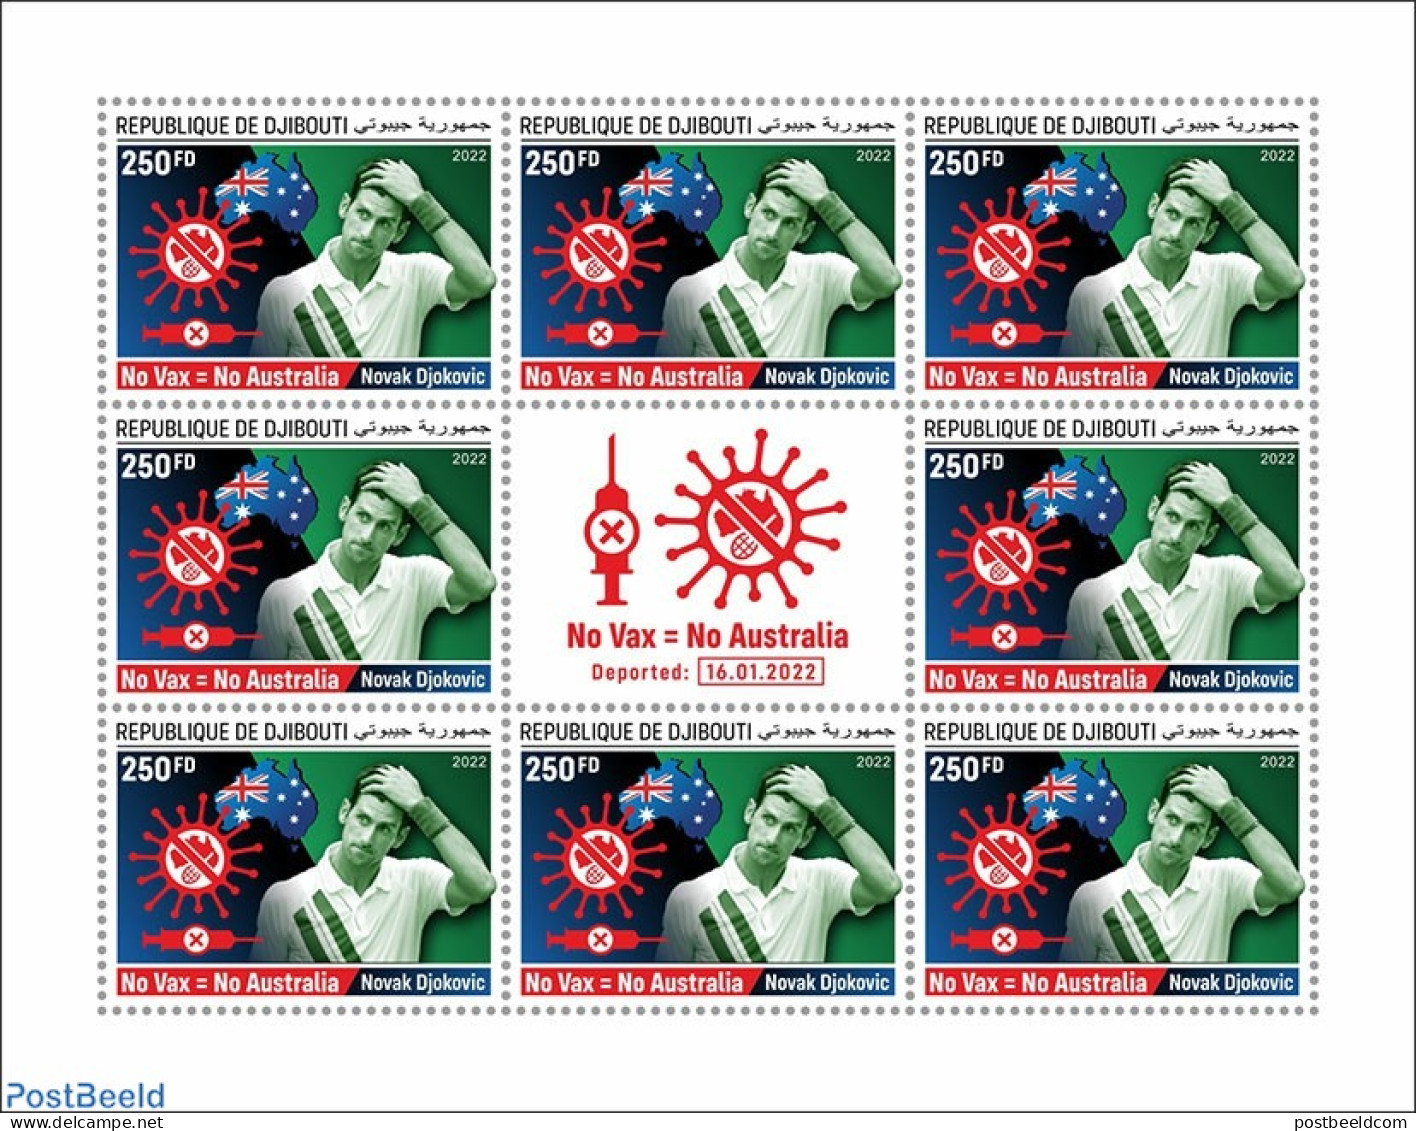 Djibouti 2022 Brand New Djibouti Post Stamp Issue (24.01.2022) On Novak Djokovic’s Deportation From Australia (16.01.. - Tenis